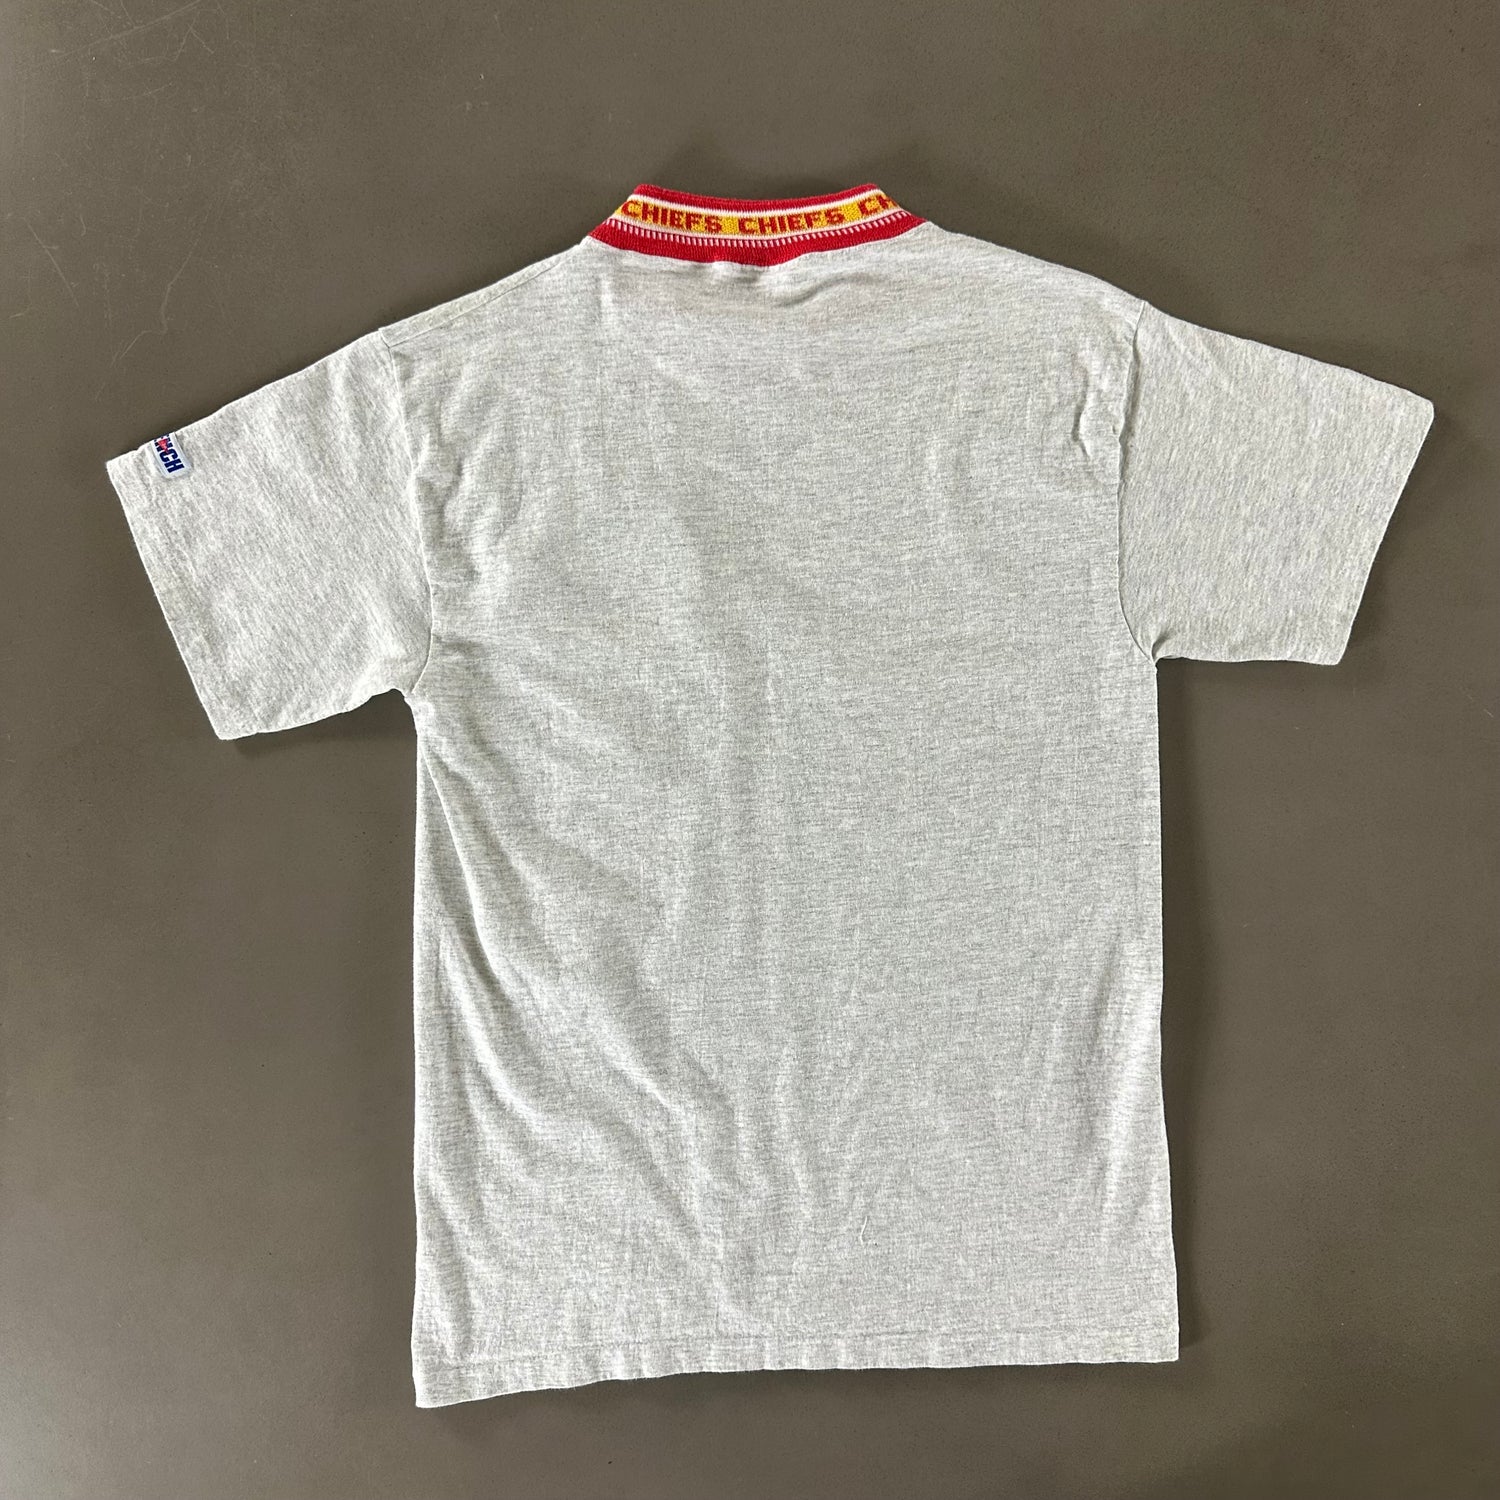 Vintage 1980s Kansas City Chiefs T-shirt size Medium